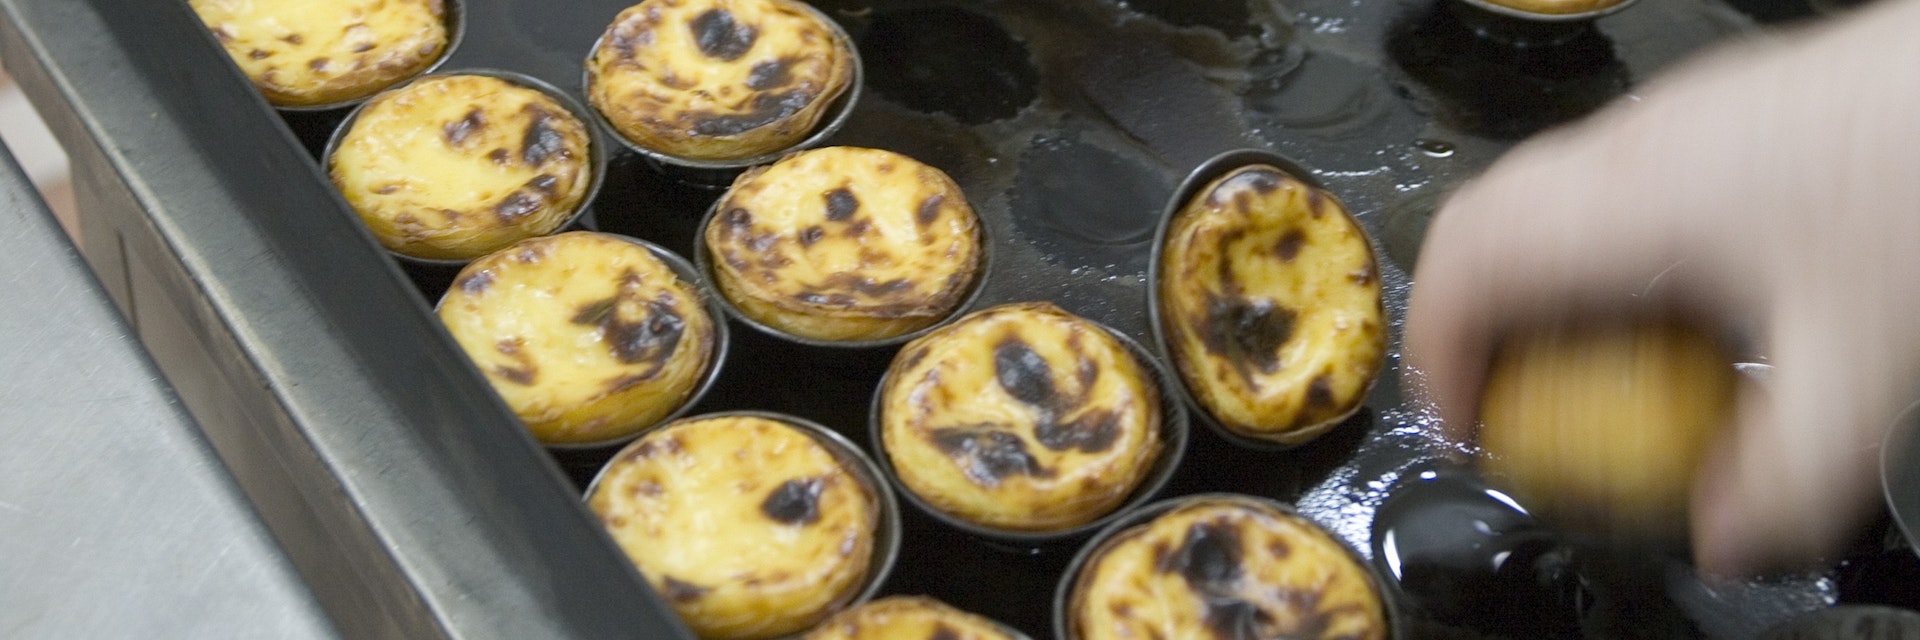 Fresh Portuguese tarts at Antiga Confeitaria de Belem.